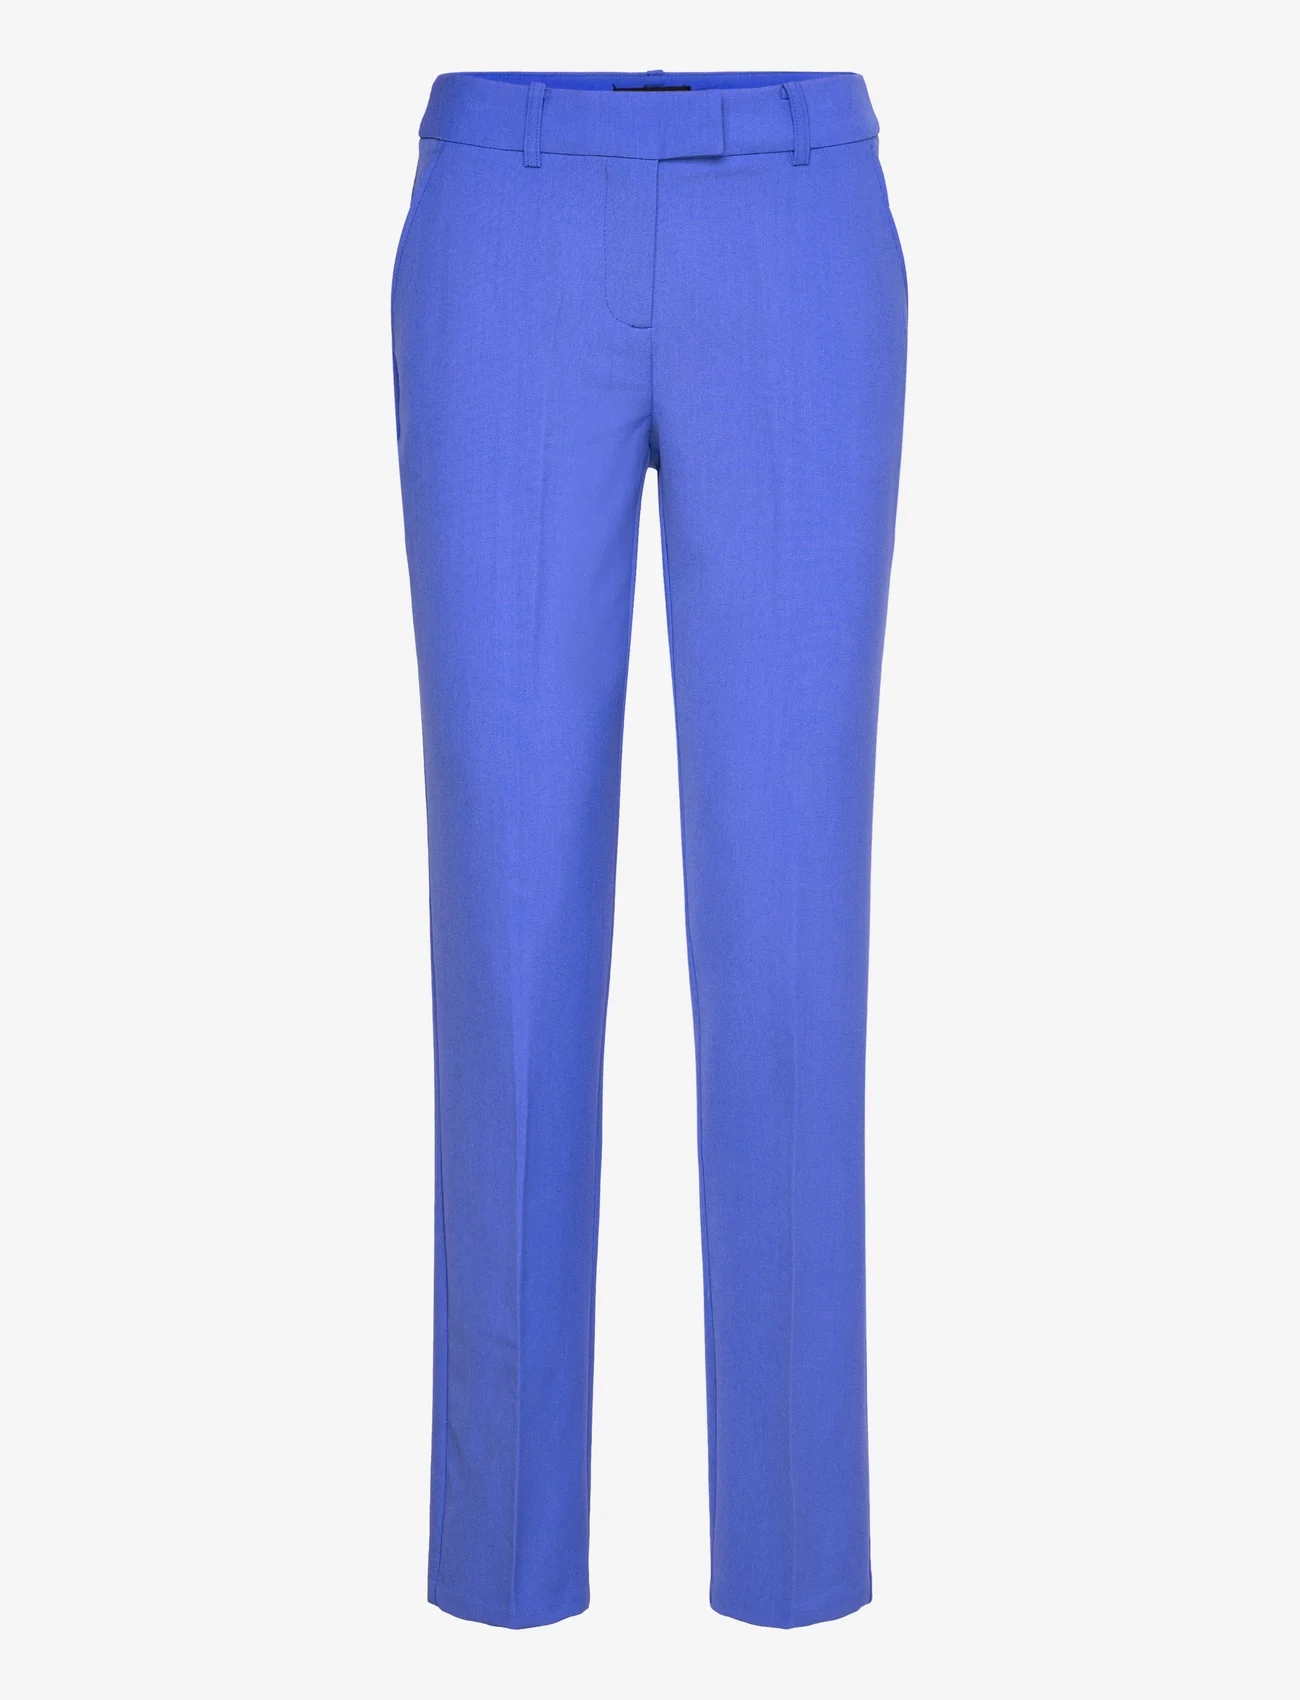 Brandtex - Suiting pants - puvunhousut - clear blue - 0